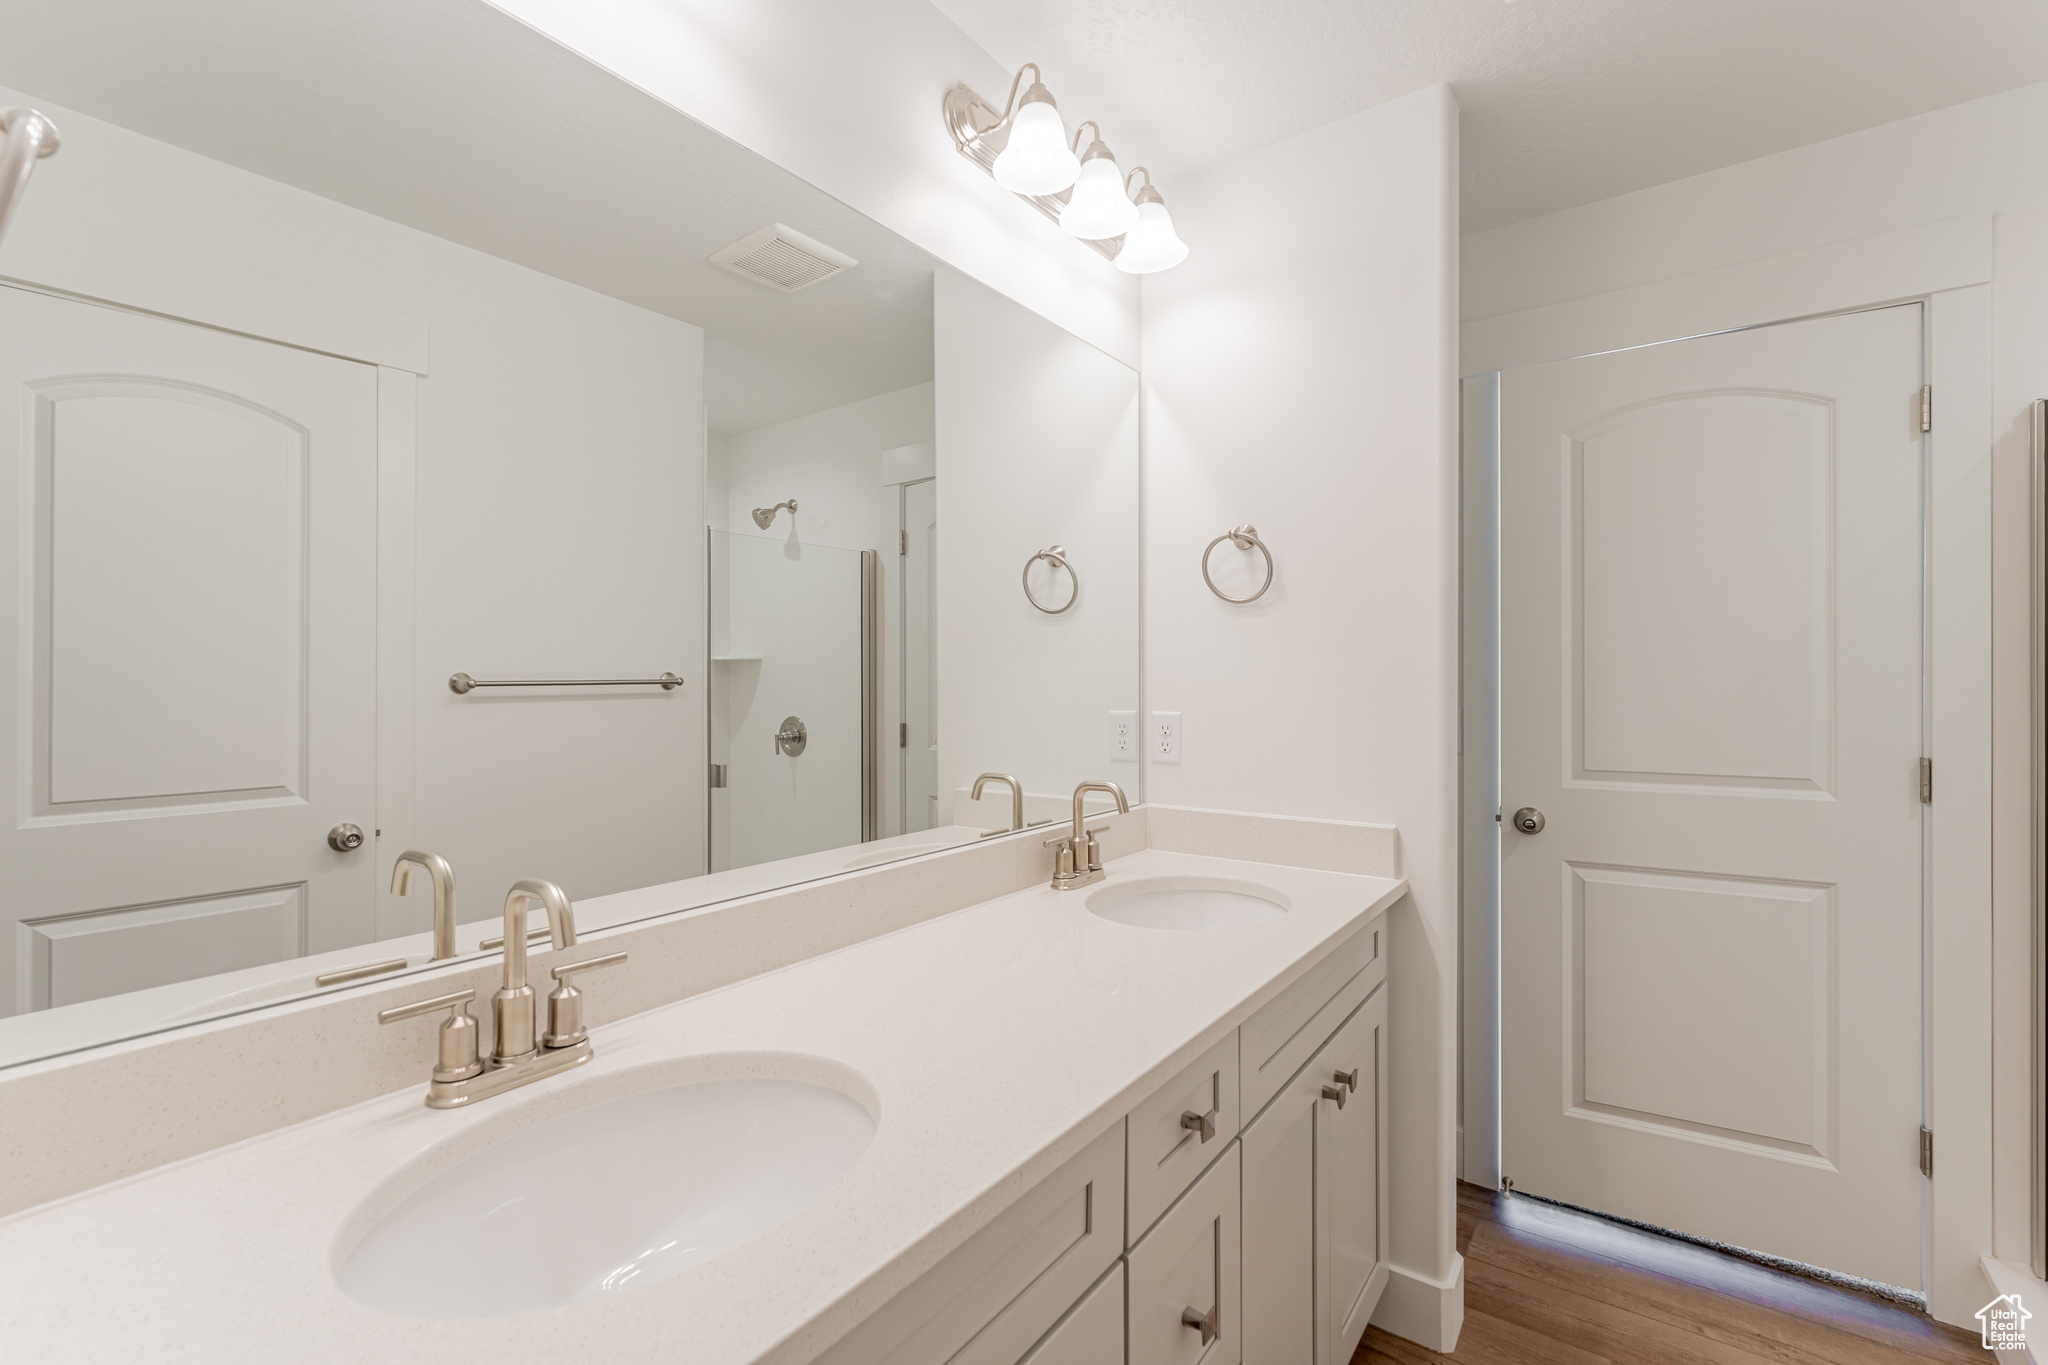 Bathroom with wood-type flooring, oversized vanity, and double sink